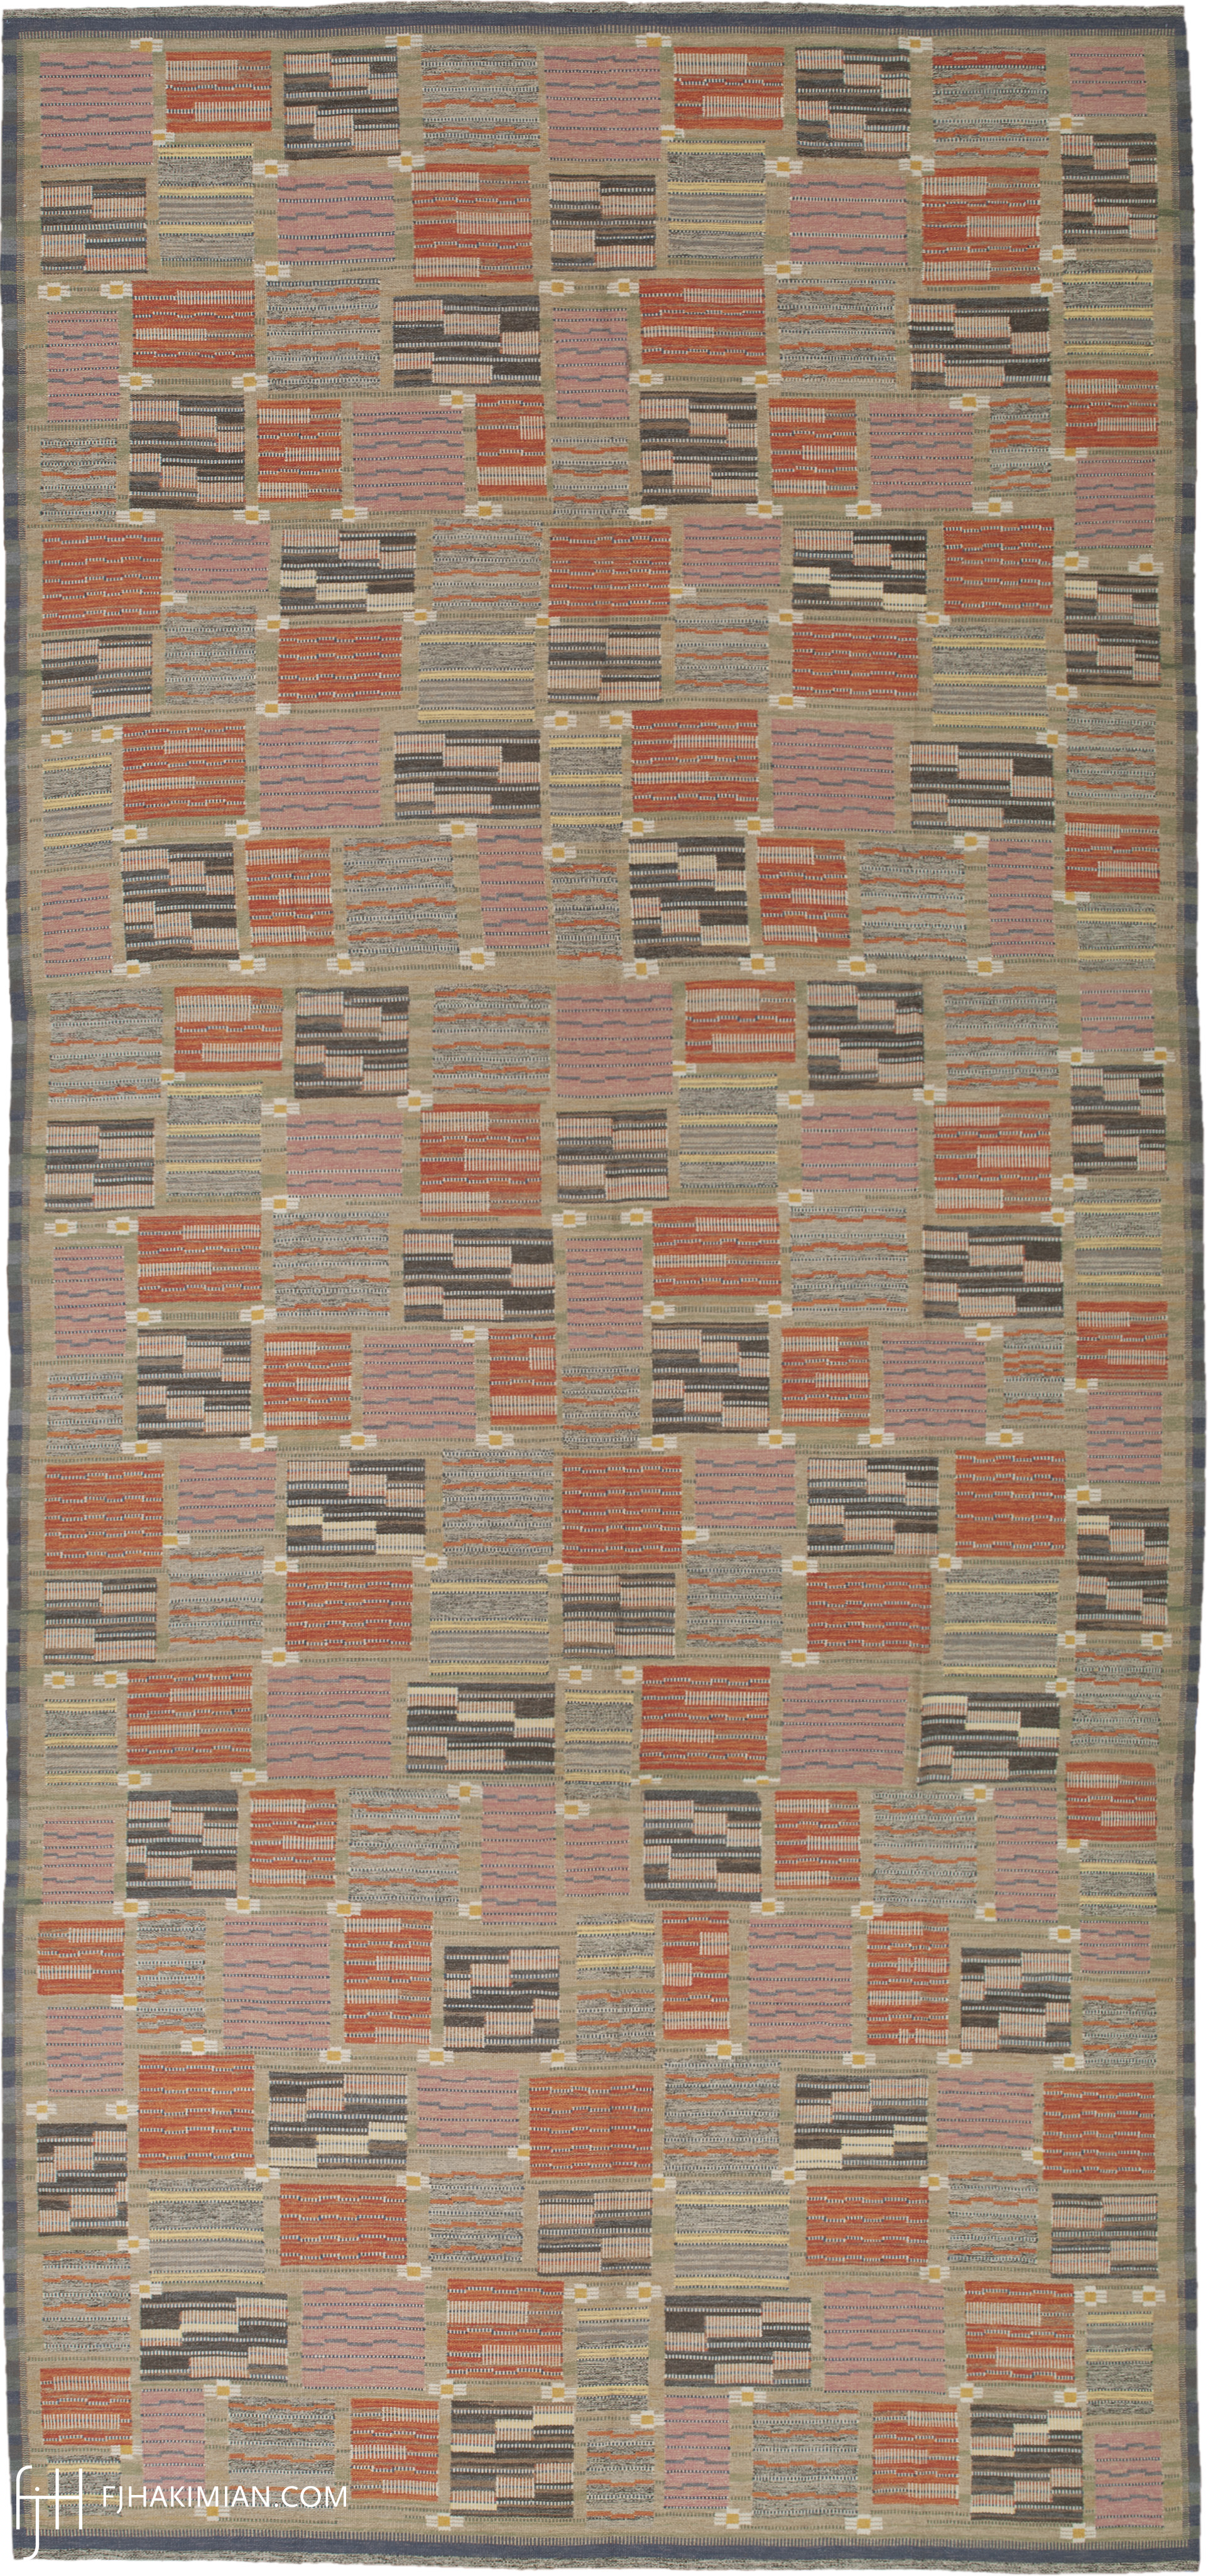 Strimmor Design | Custom Swedish Flat Weave Carpet | FJ Hakimian | Carpet Gallery in NY